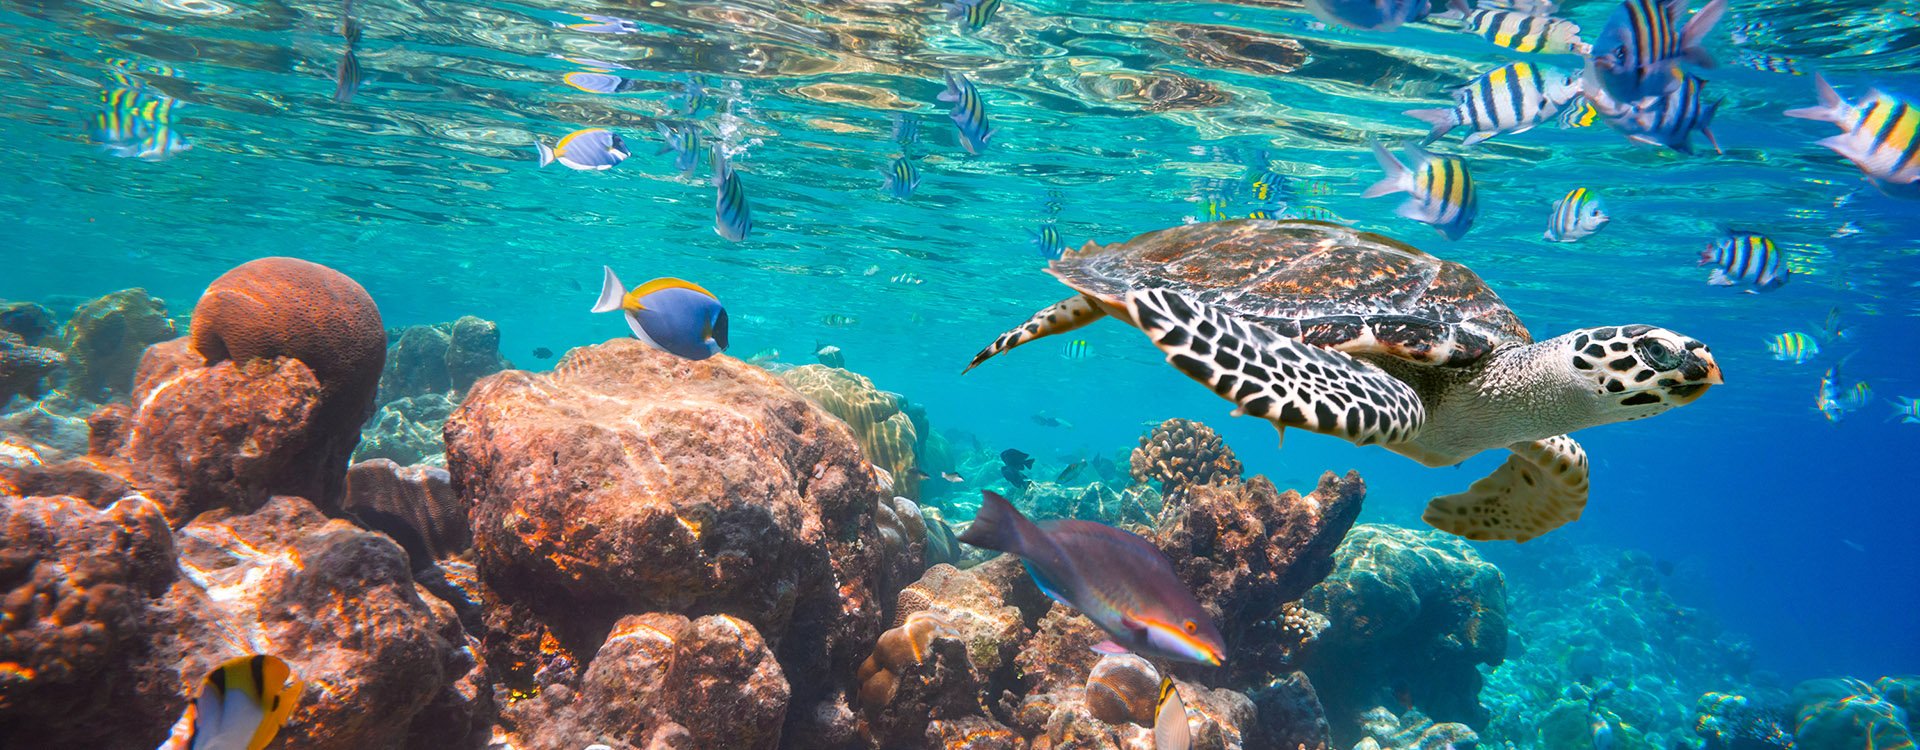 Hawksbill Turtle - Eretmochelys imbricata floats under water. Maldives Indian Ocean coral reef